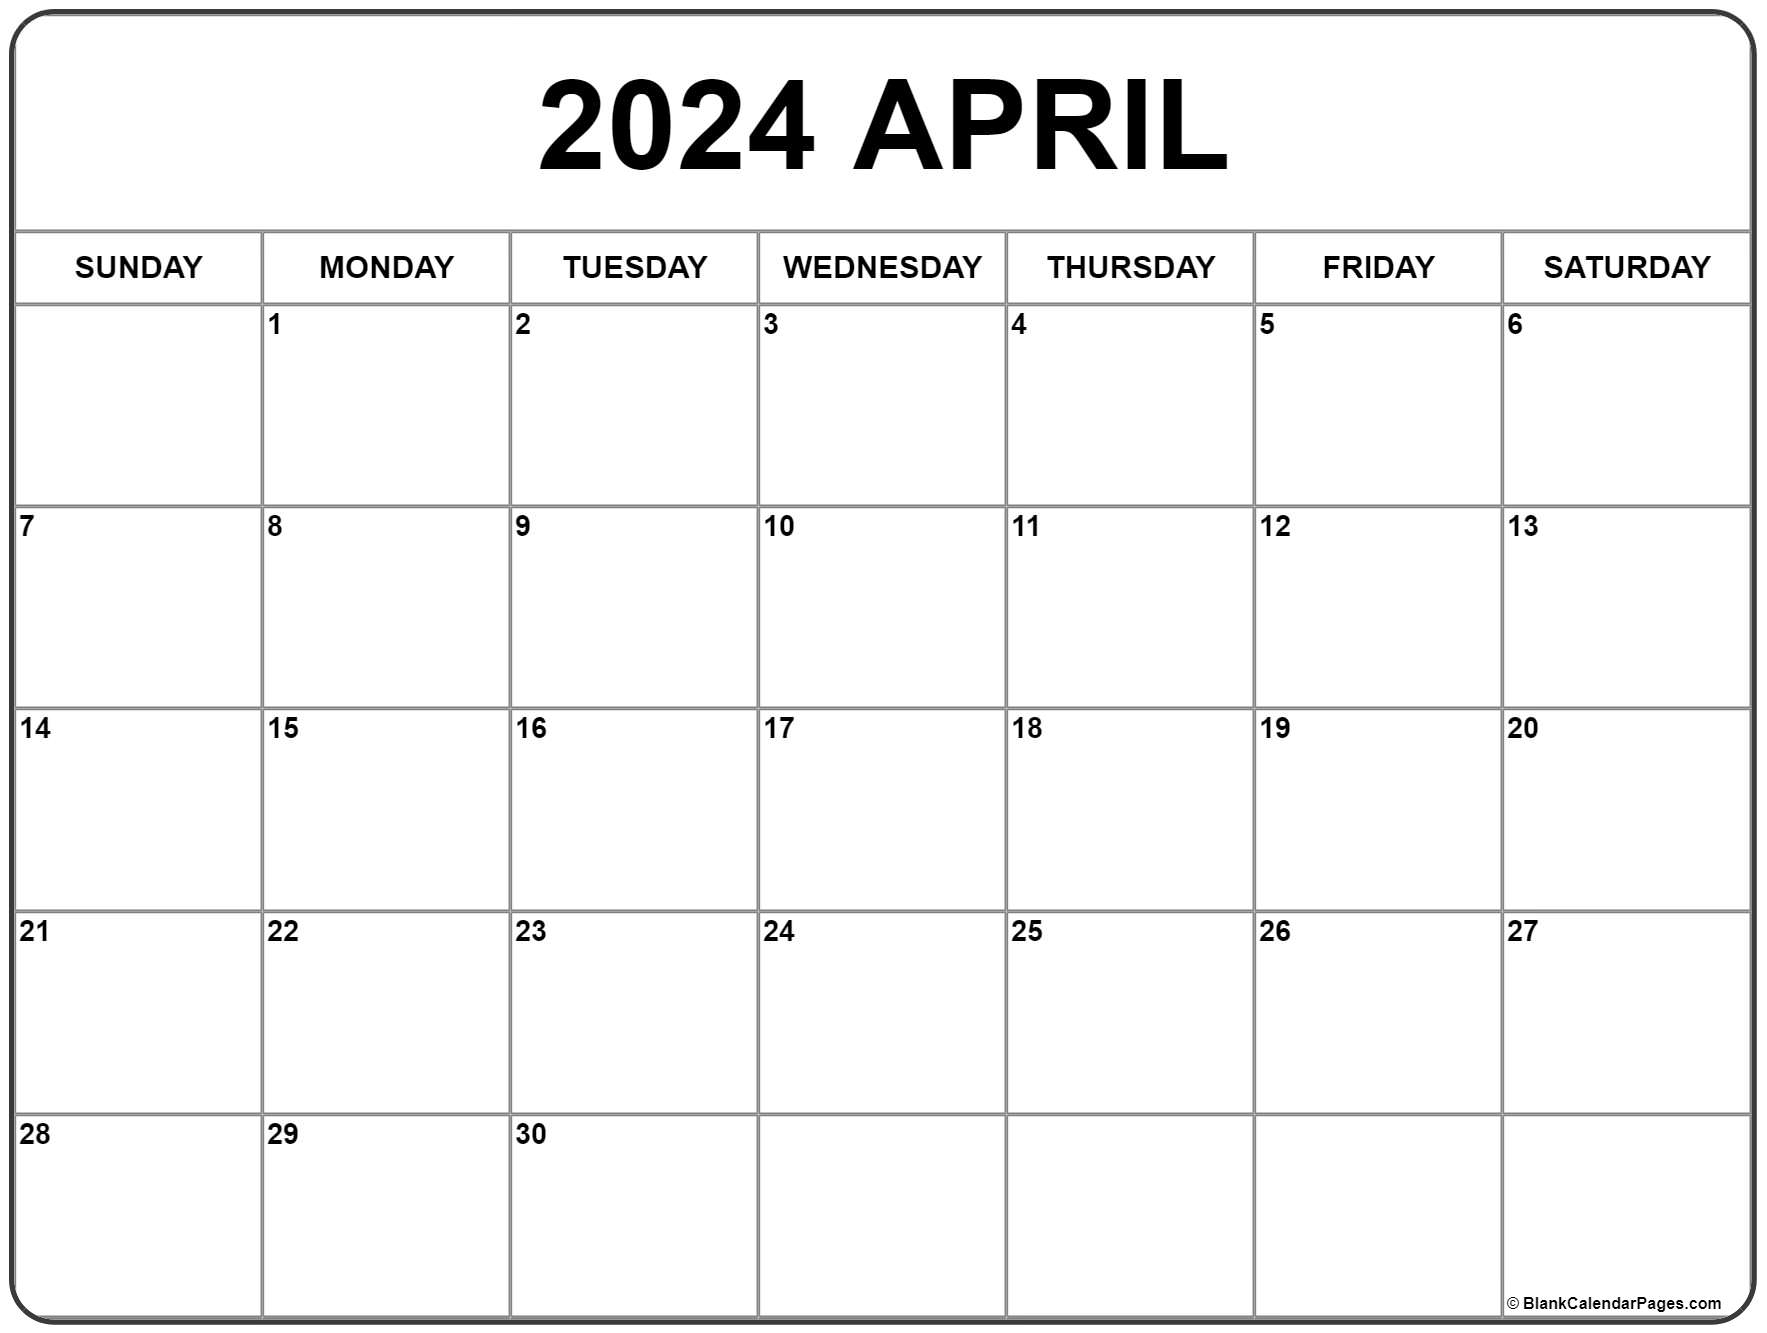 April 2024 Calendar | Free Printable Calendar within Blank Calendar April 2024